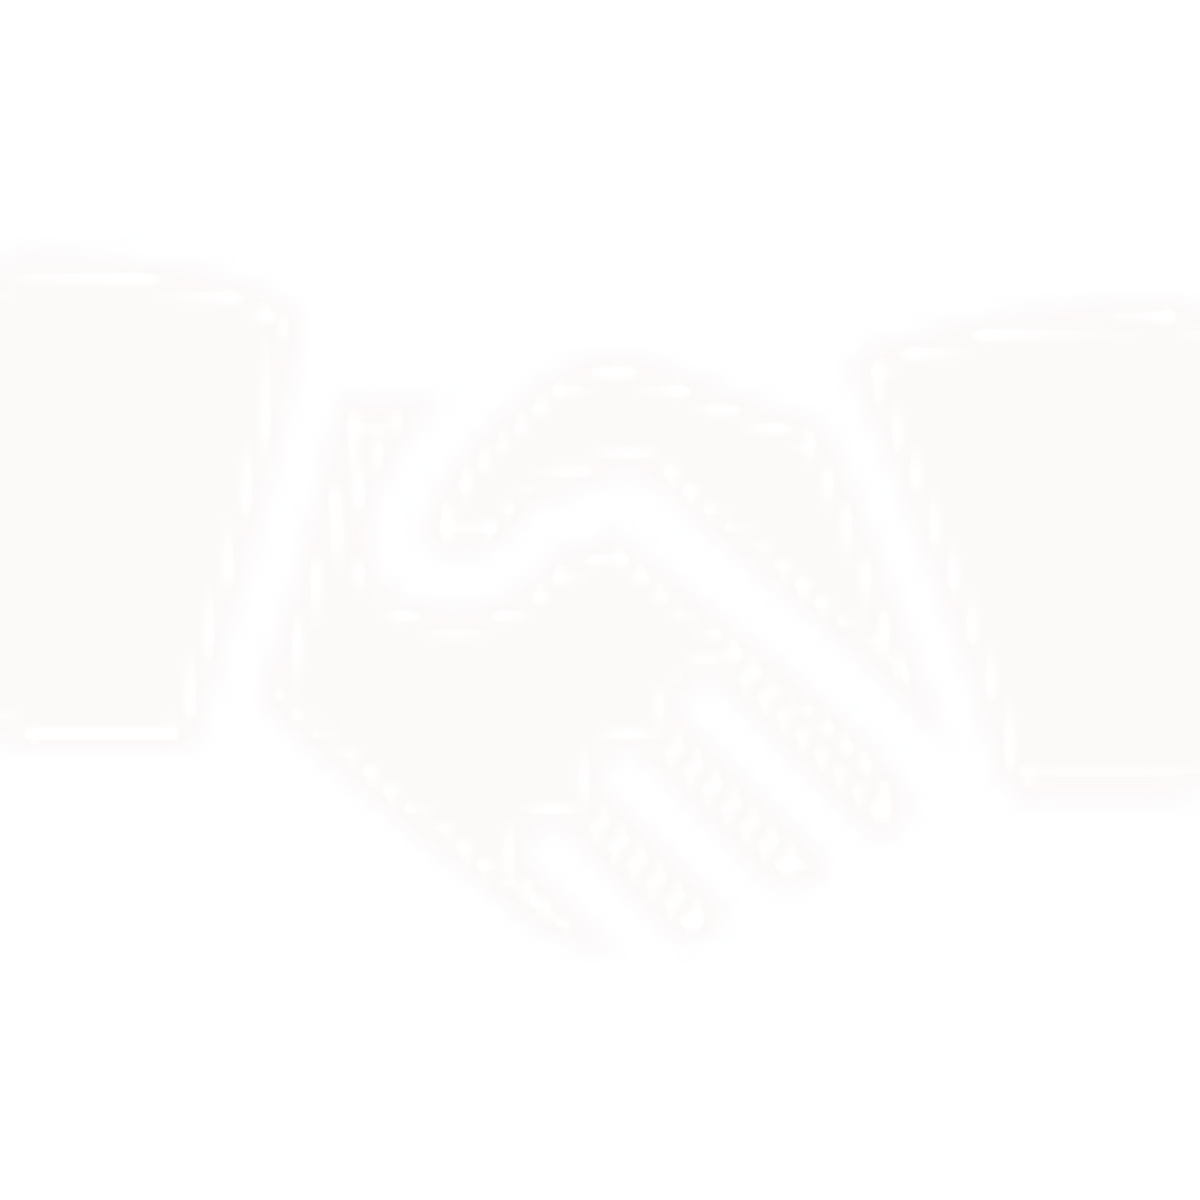 White handshake icon